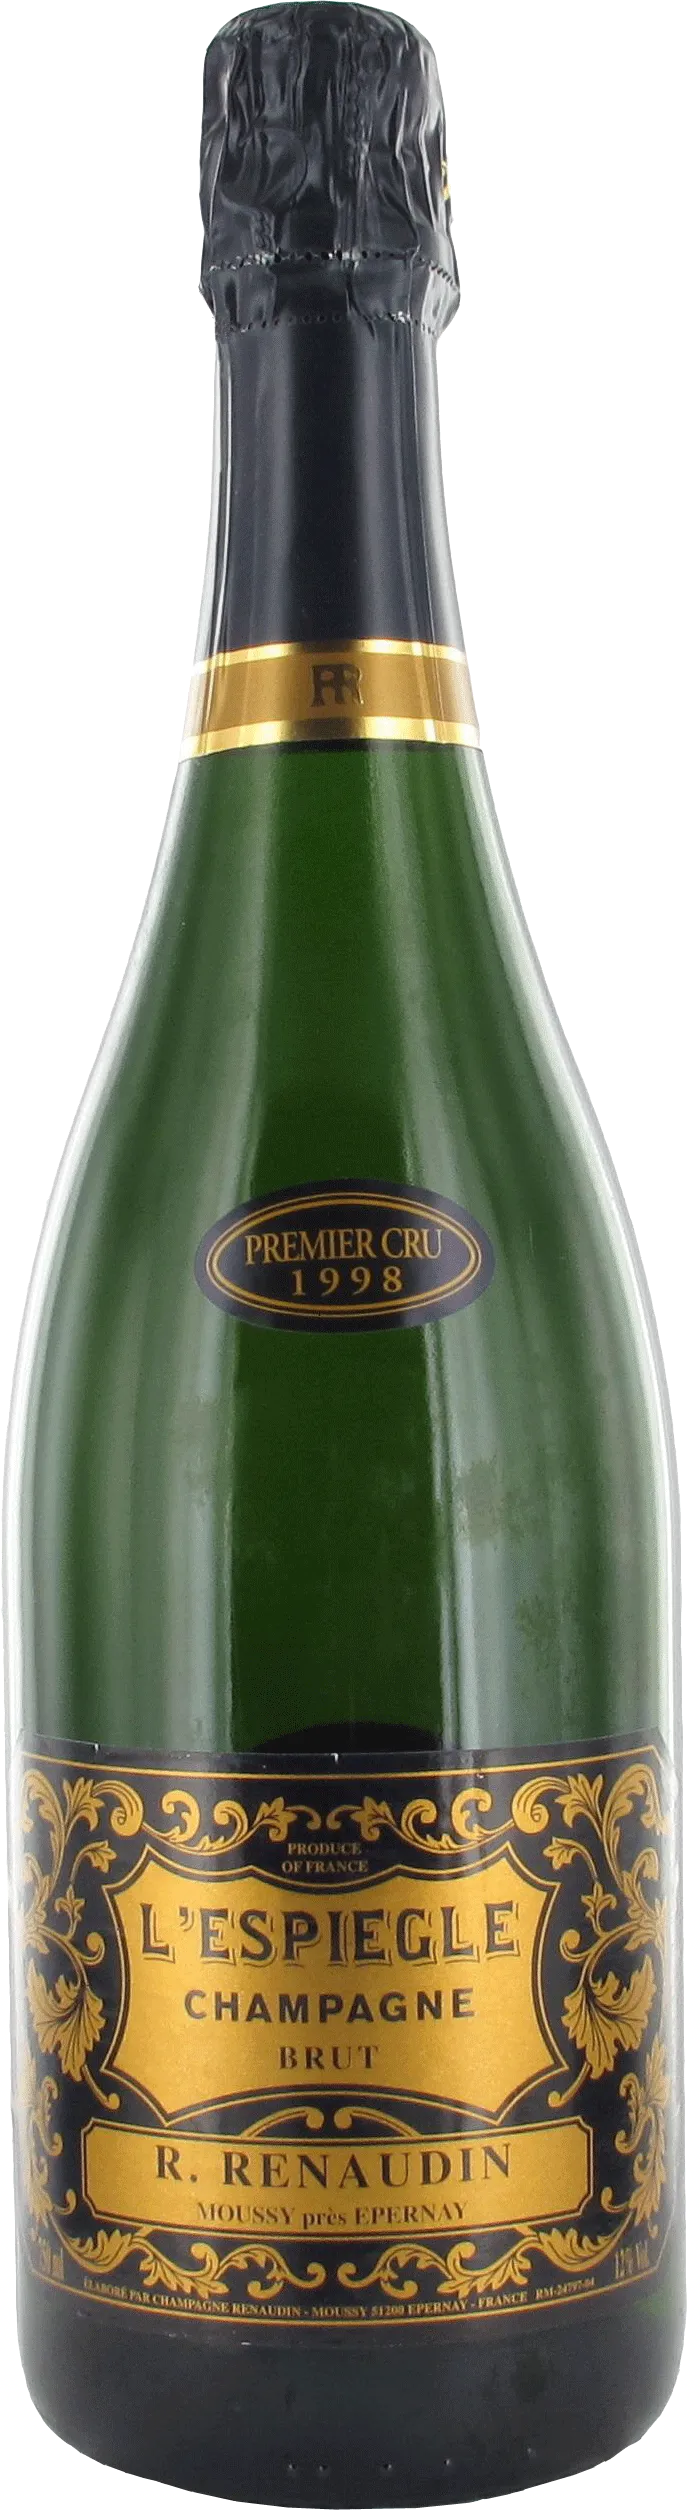 Bottle of R. Renaudin Brut Réserve Champagnewith label visible